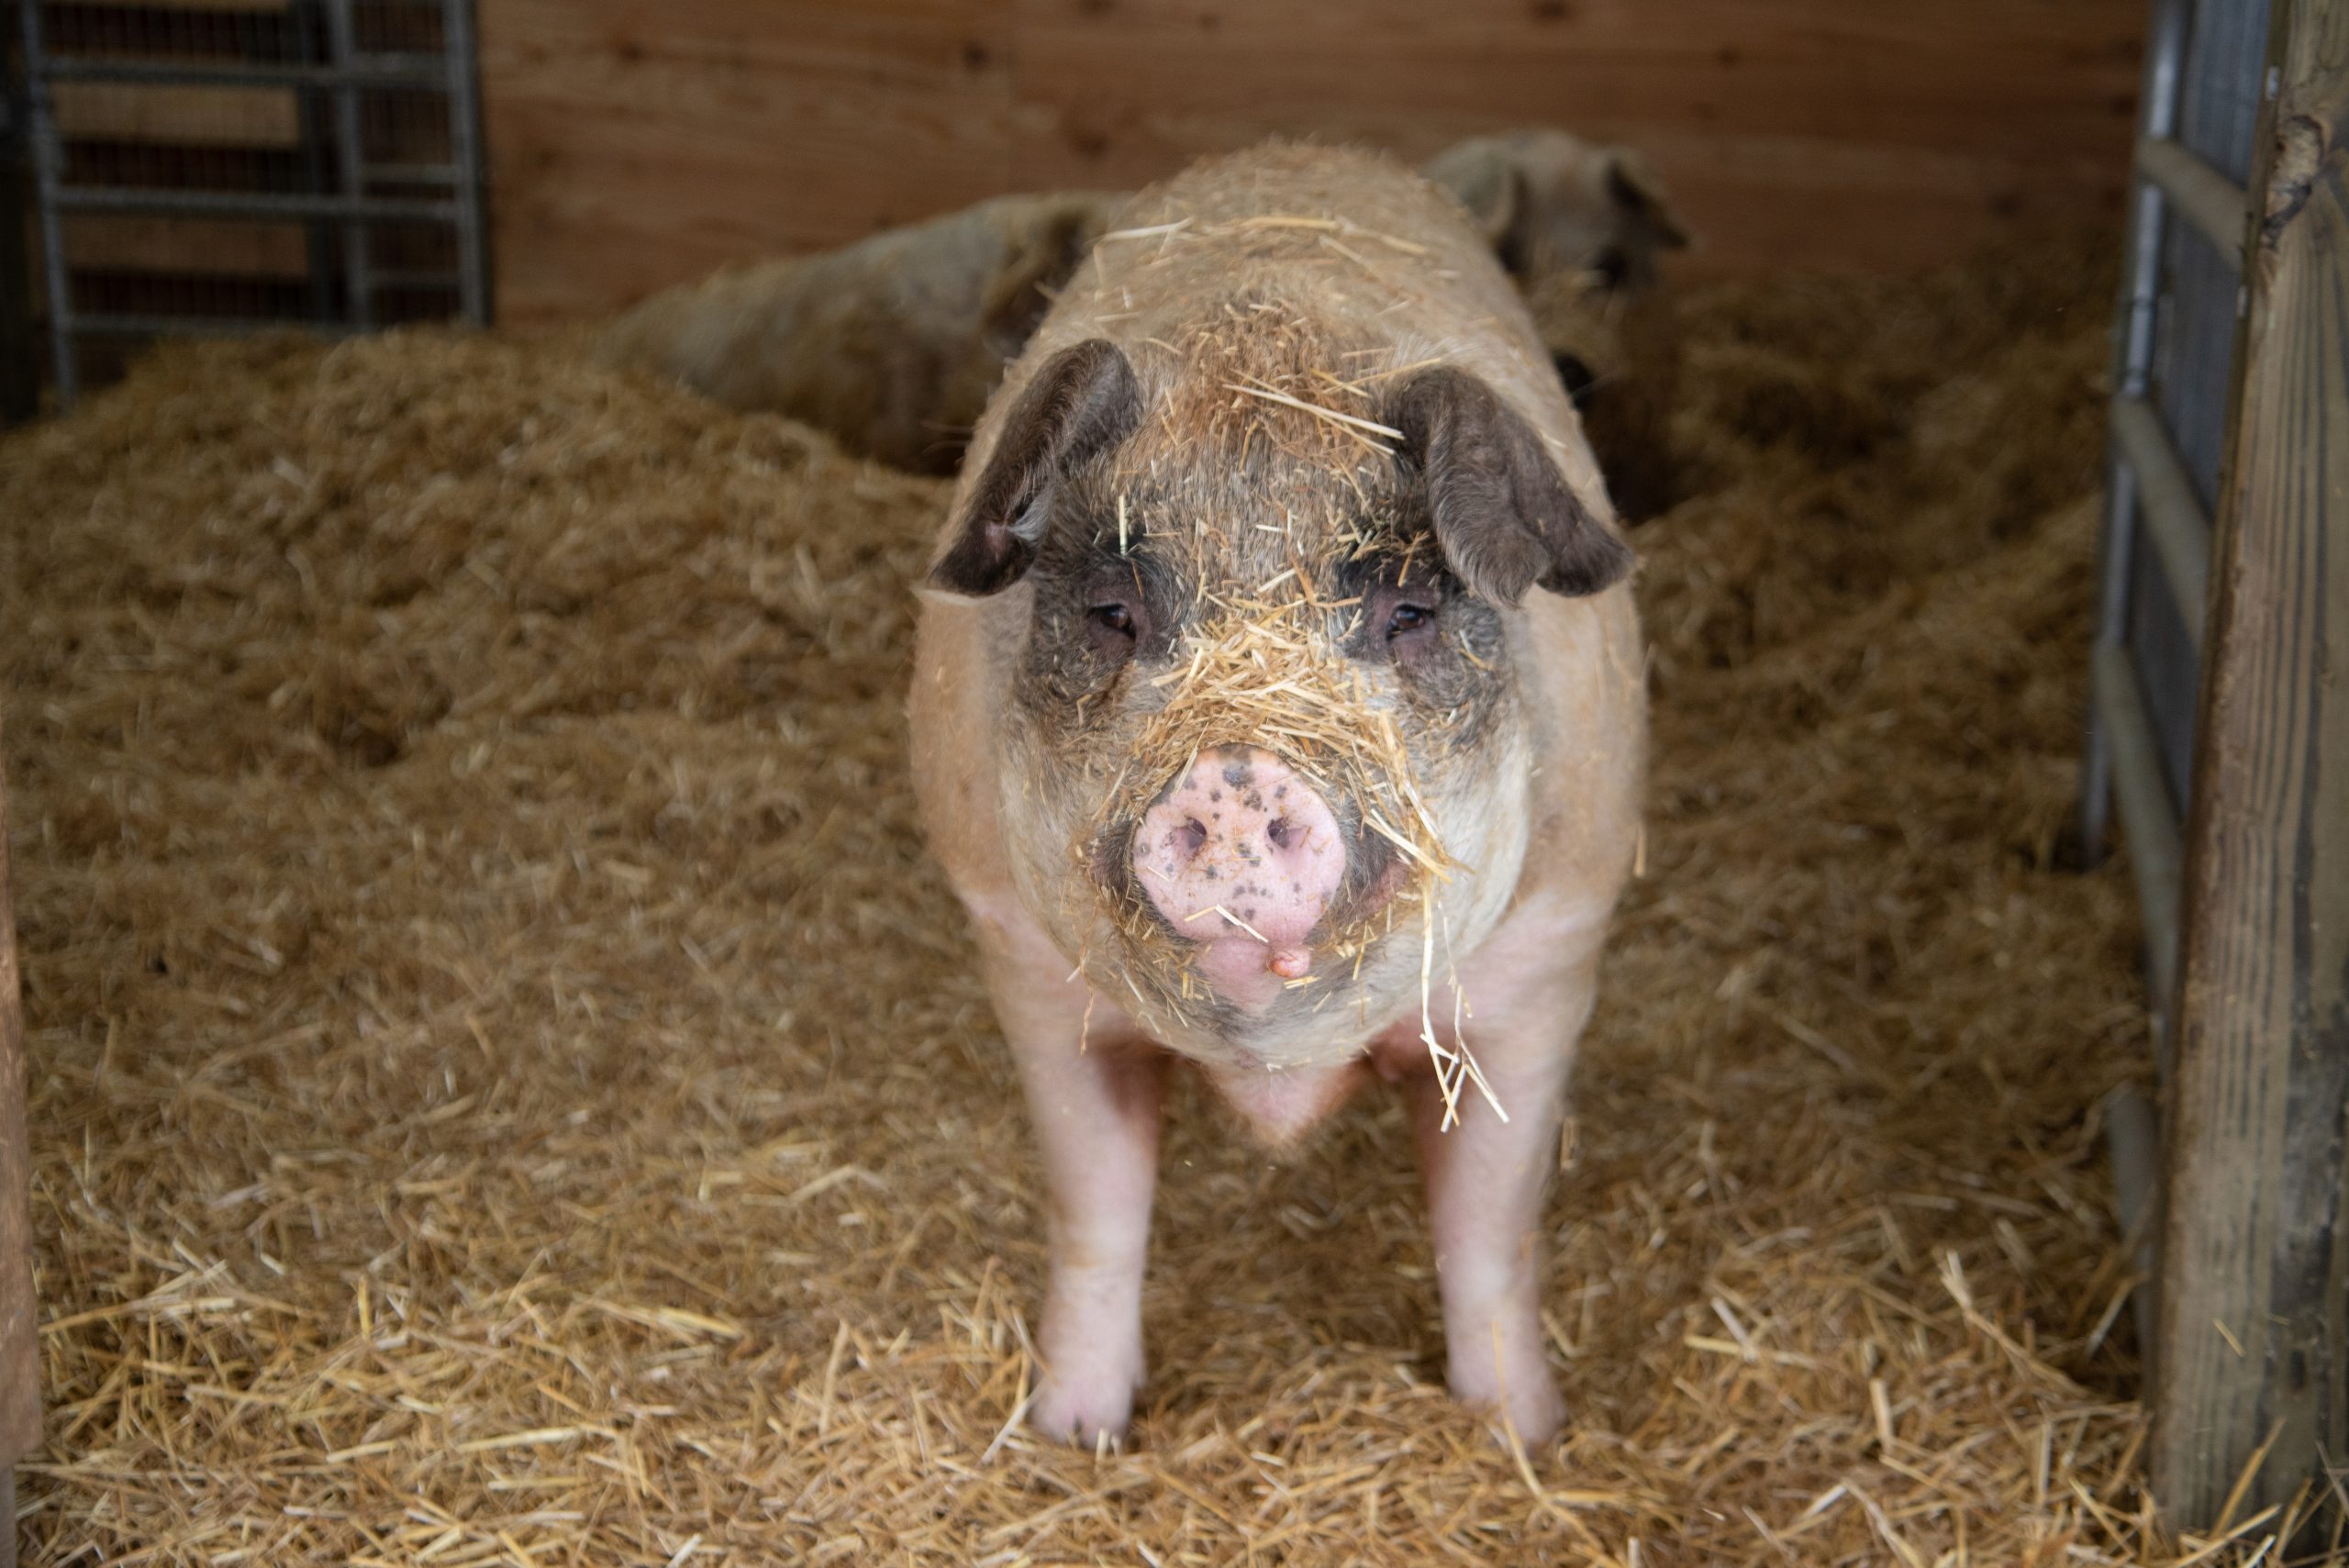 Betty pig at Farm Sanctuary